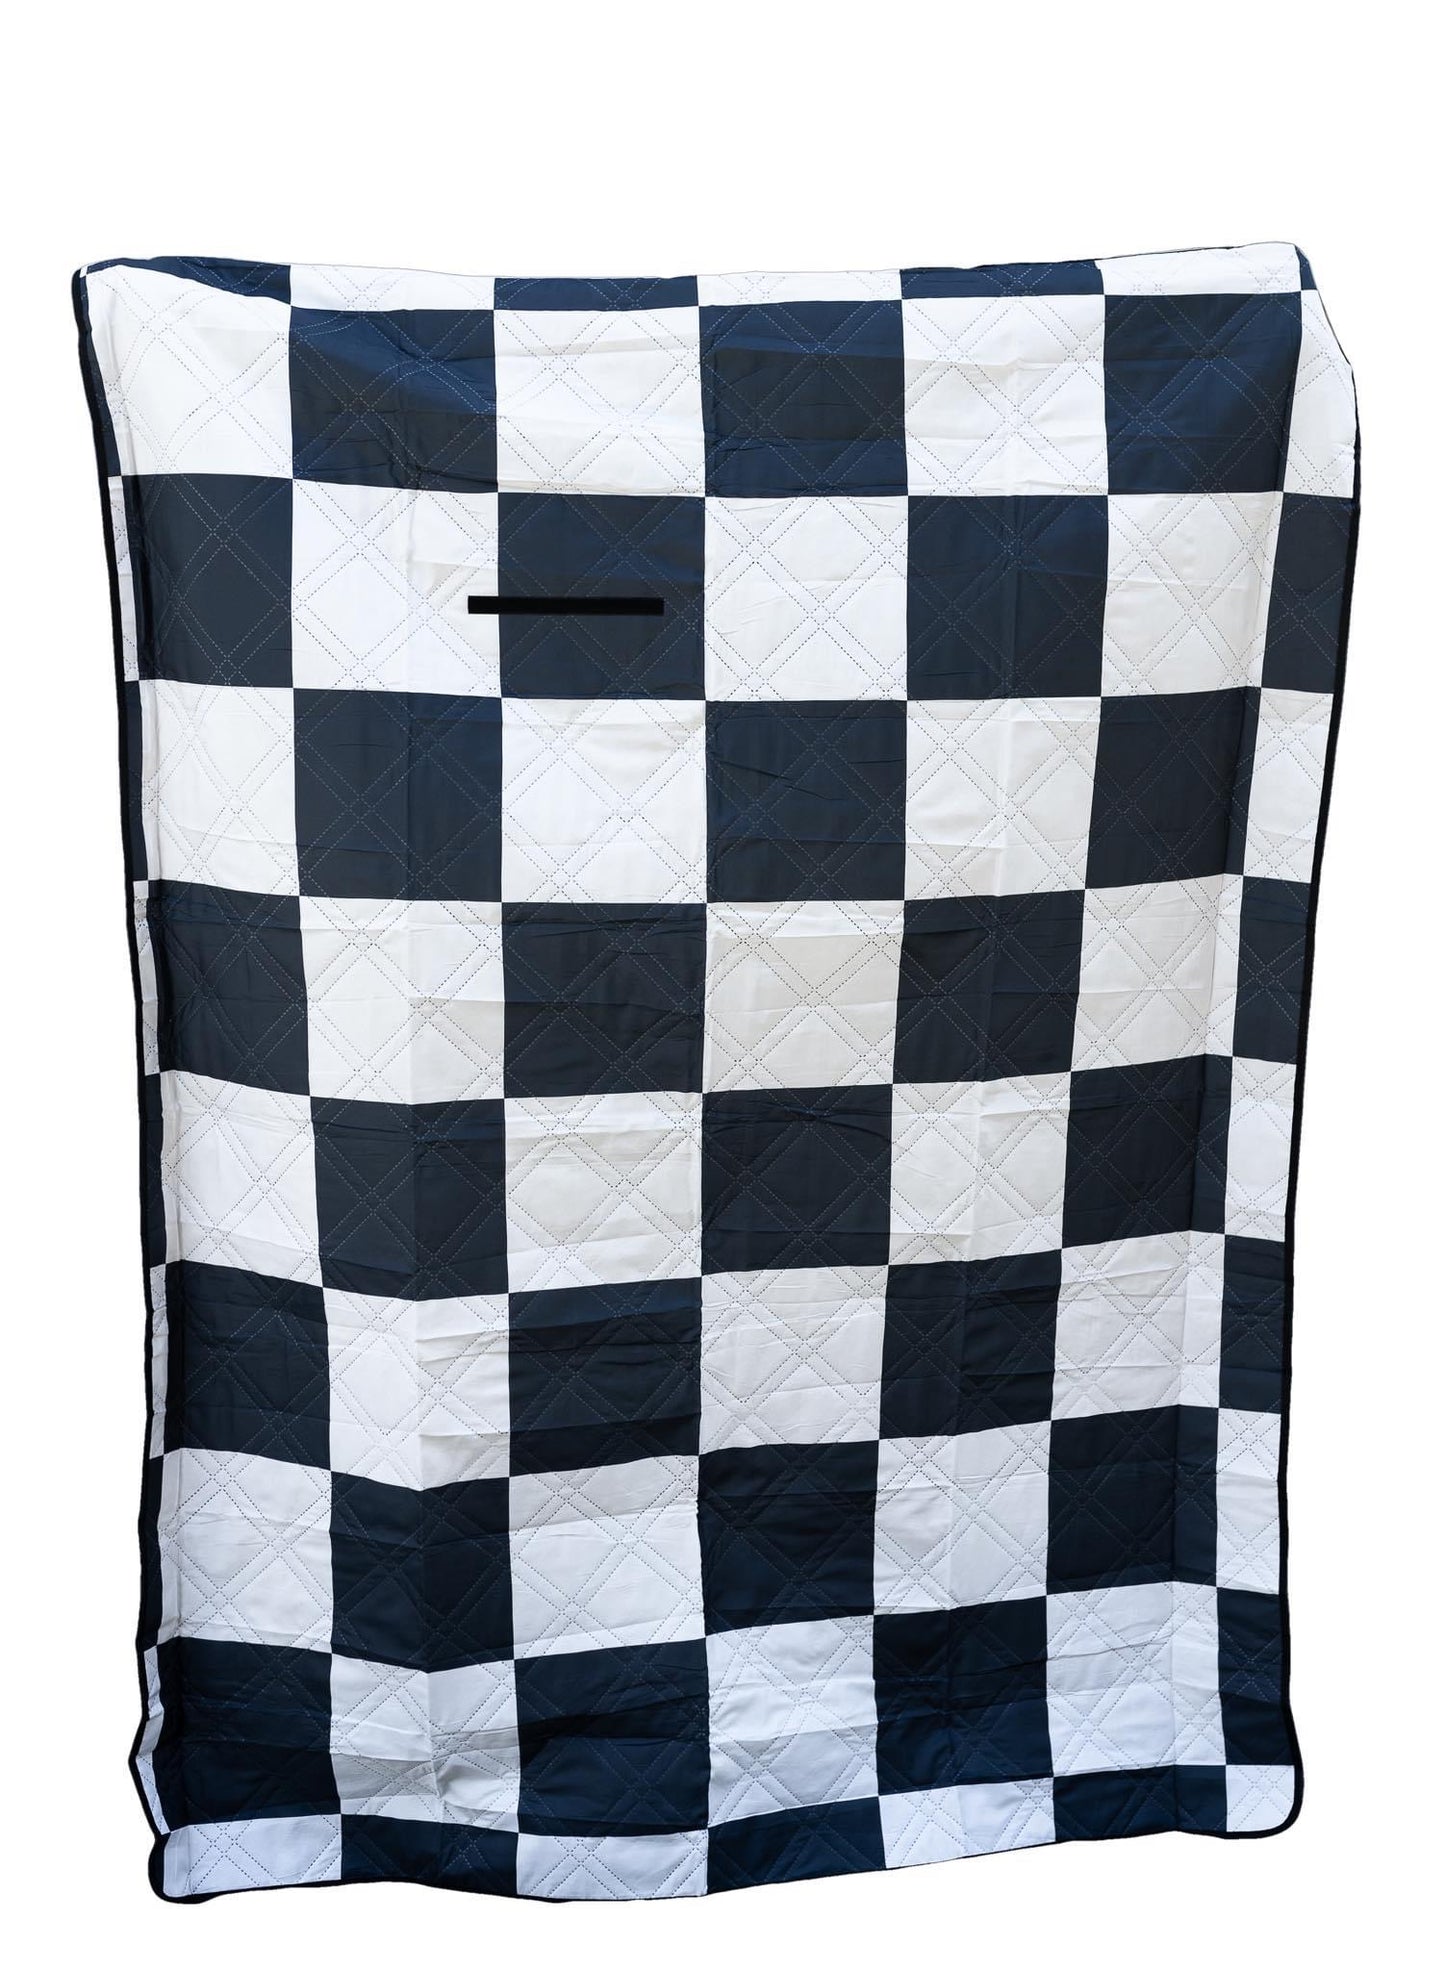 Outdoor Blanket || Checkered